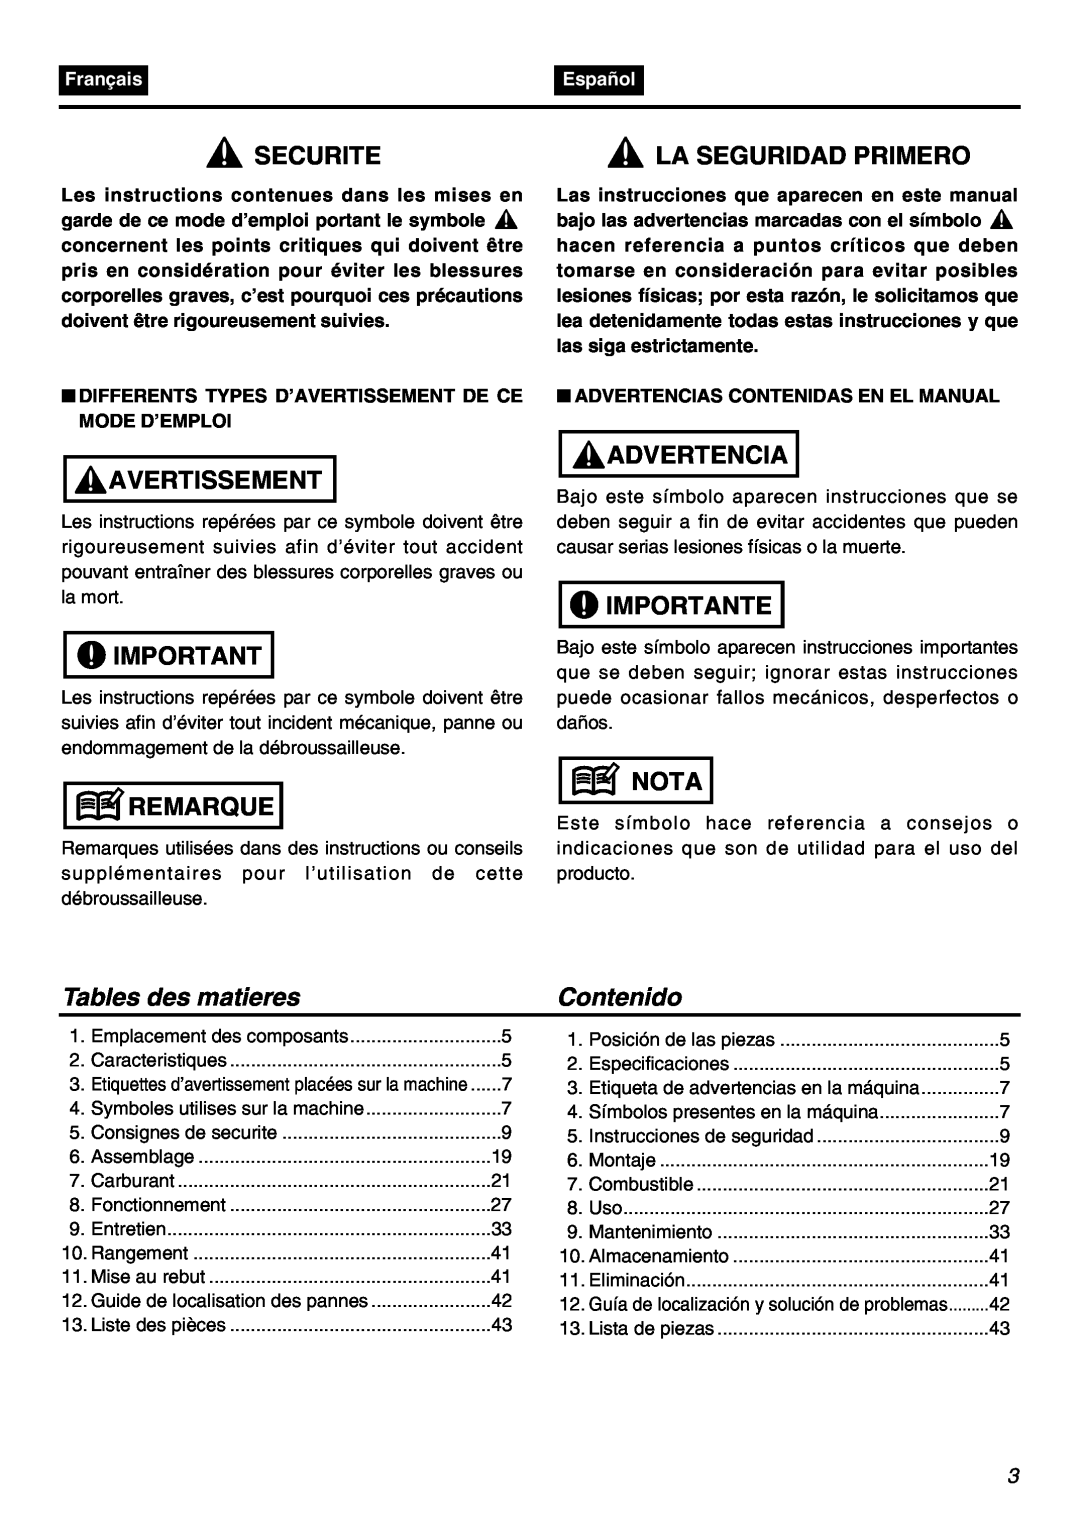 Zenoah BT250 manual Securite, Avertissement, Remarque, Advertencia, Importante, Nota, Tables des matieres, Contenido 